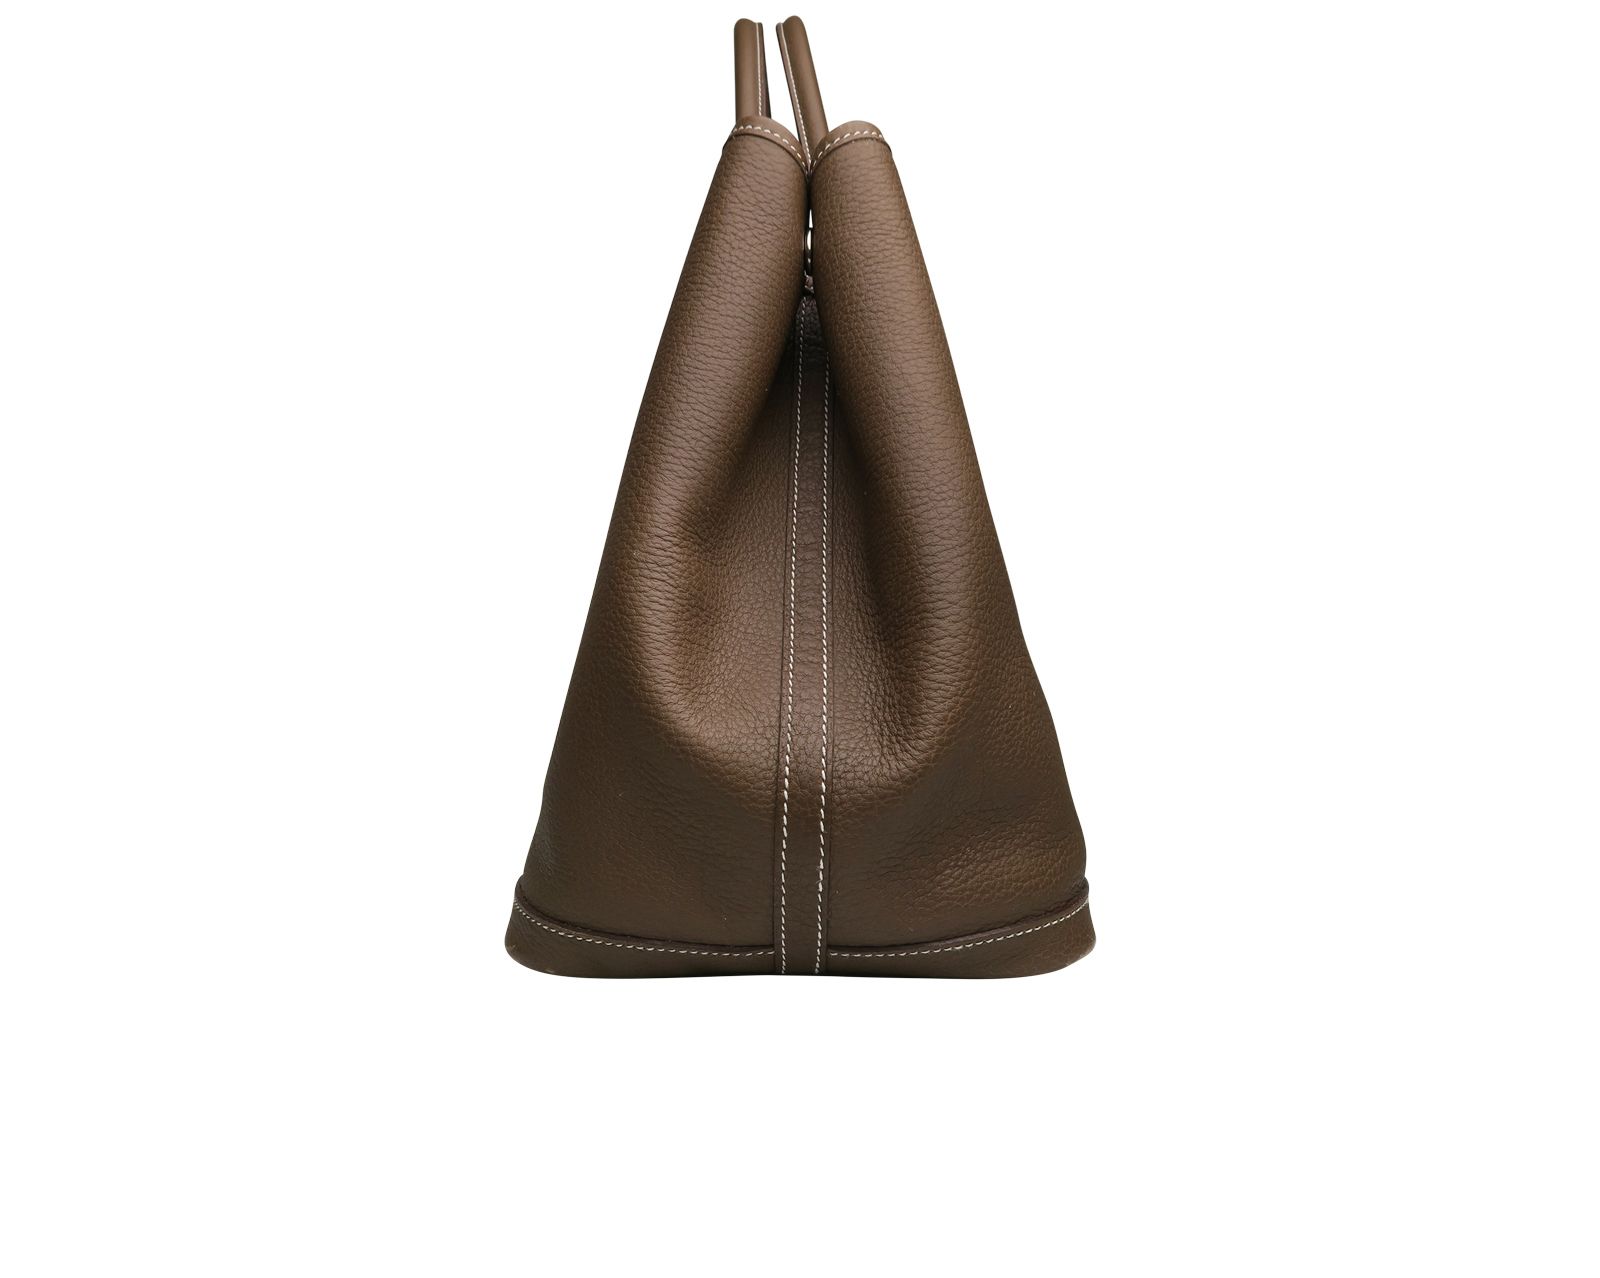 Authentic Hermes Garden Party - Handbags - Bags - Wallets - 105027040